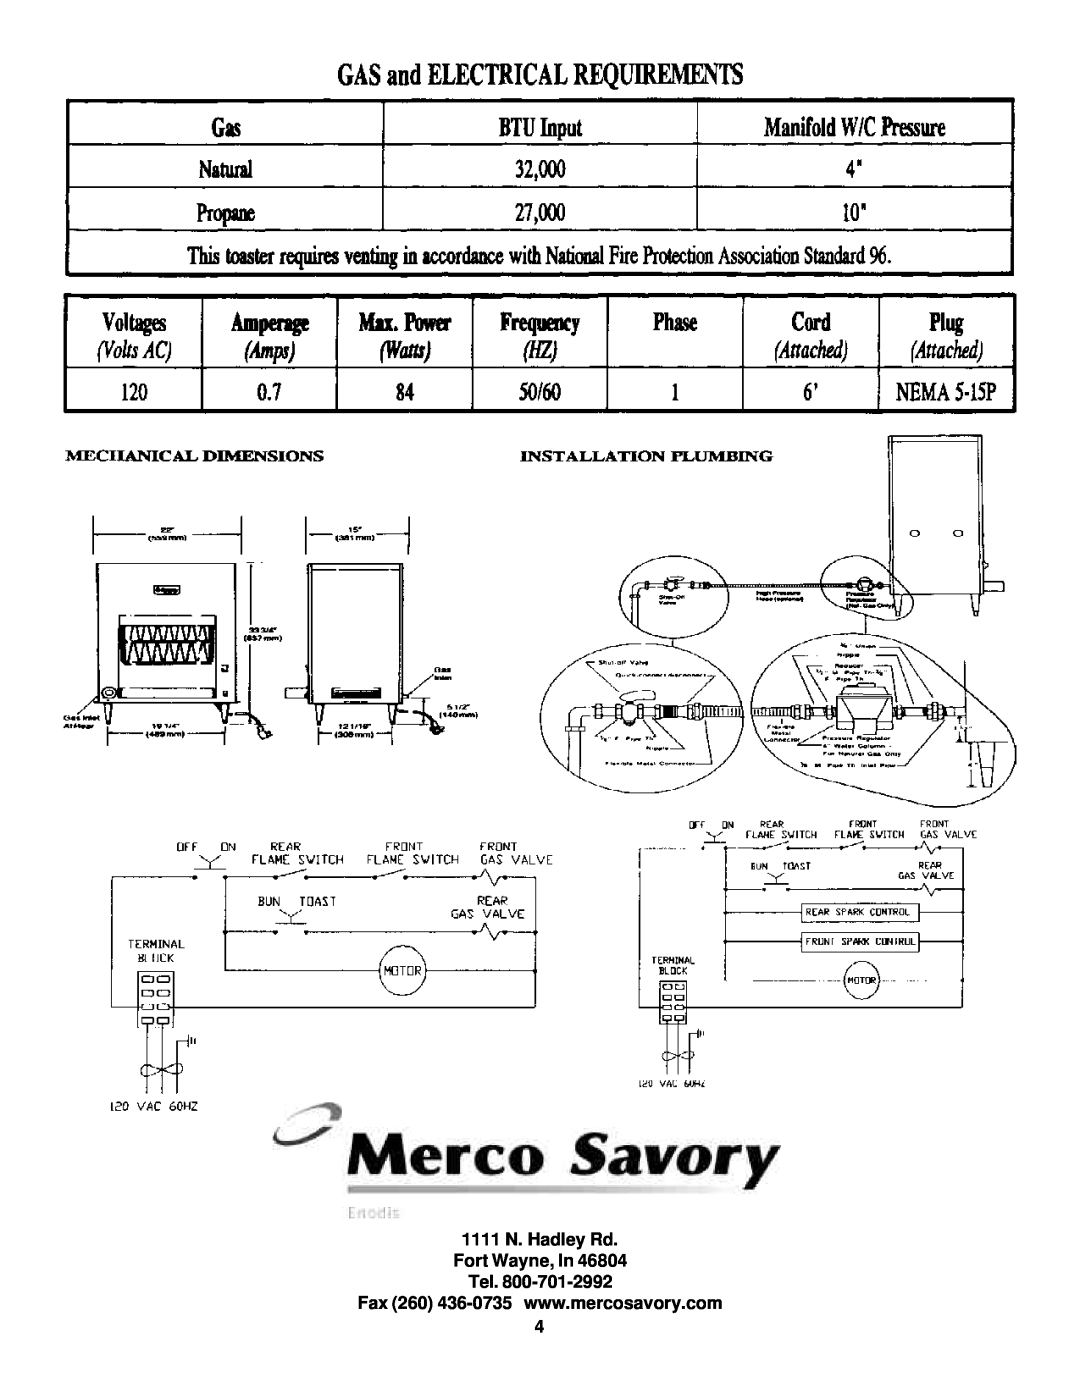 Merco Savory CG-30 operation manual 1111 N. Hadley Rd Fort Wayne, In Tel 